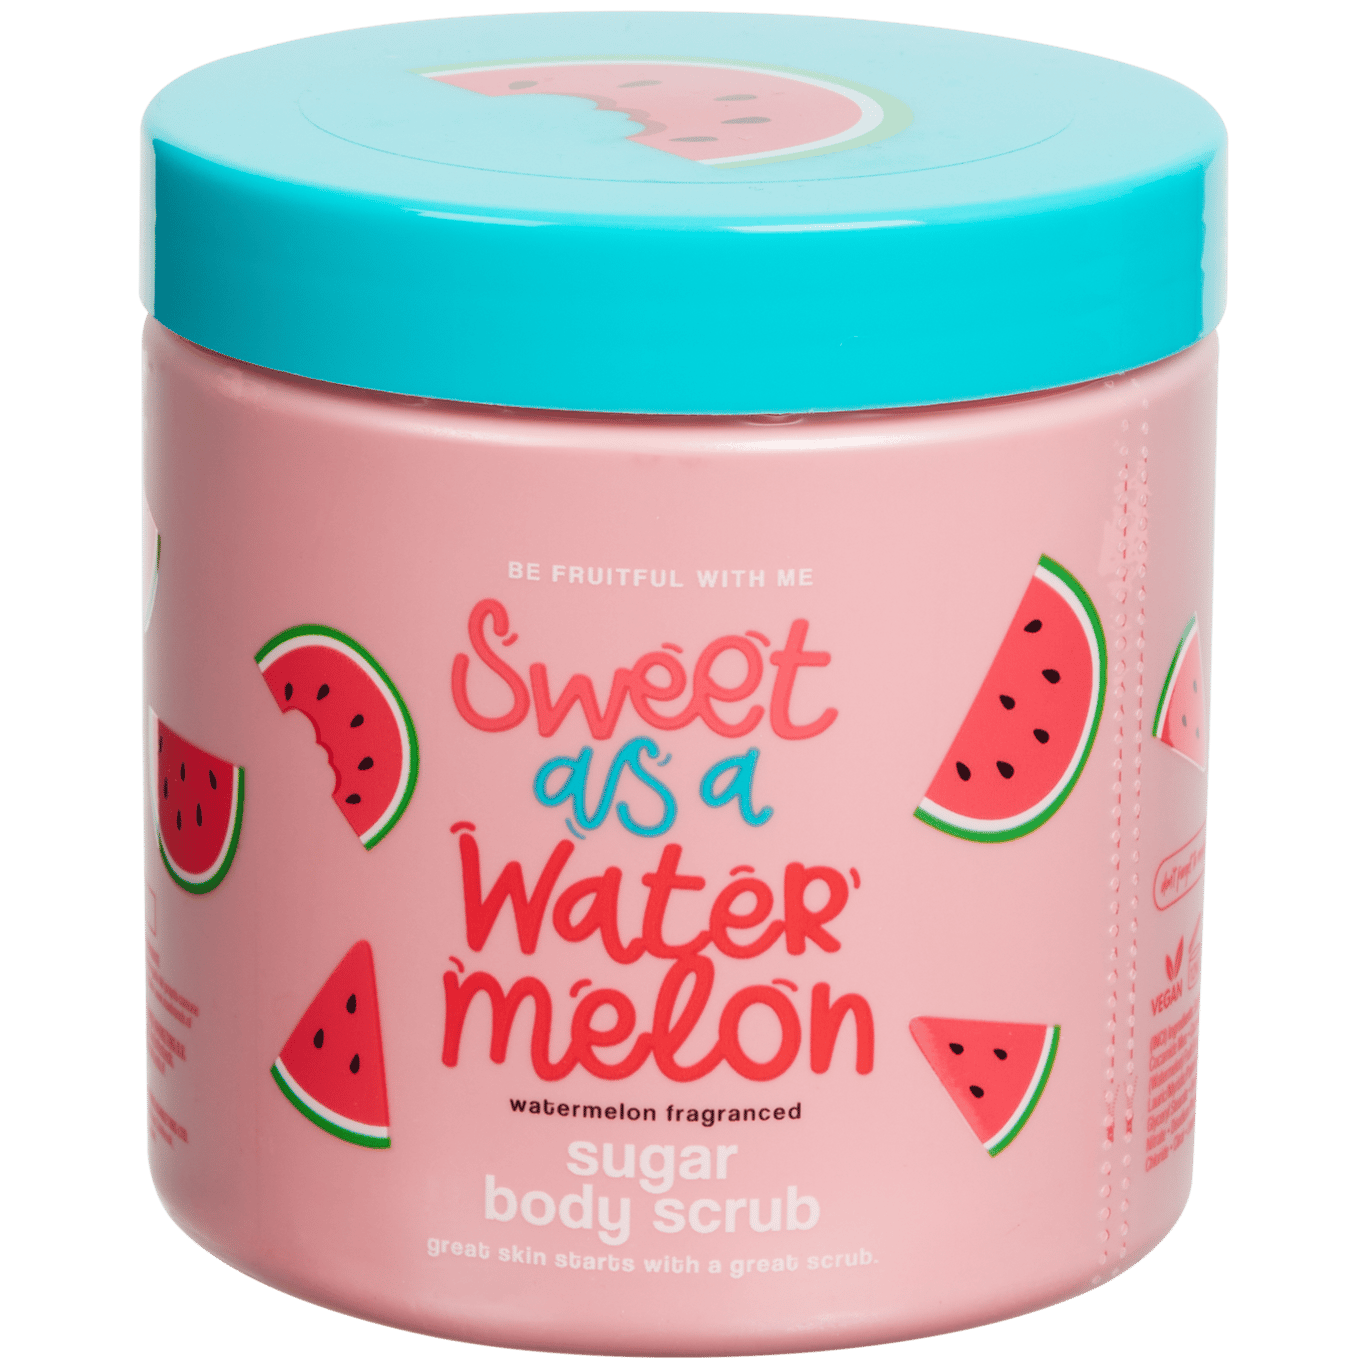 Sugar-Bodypeeling Wassermelone